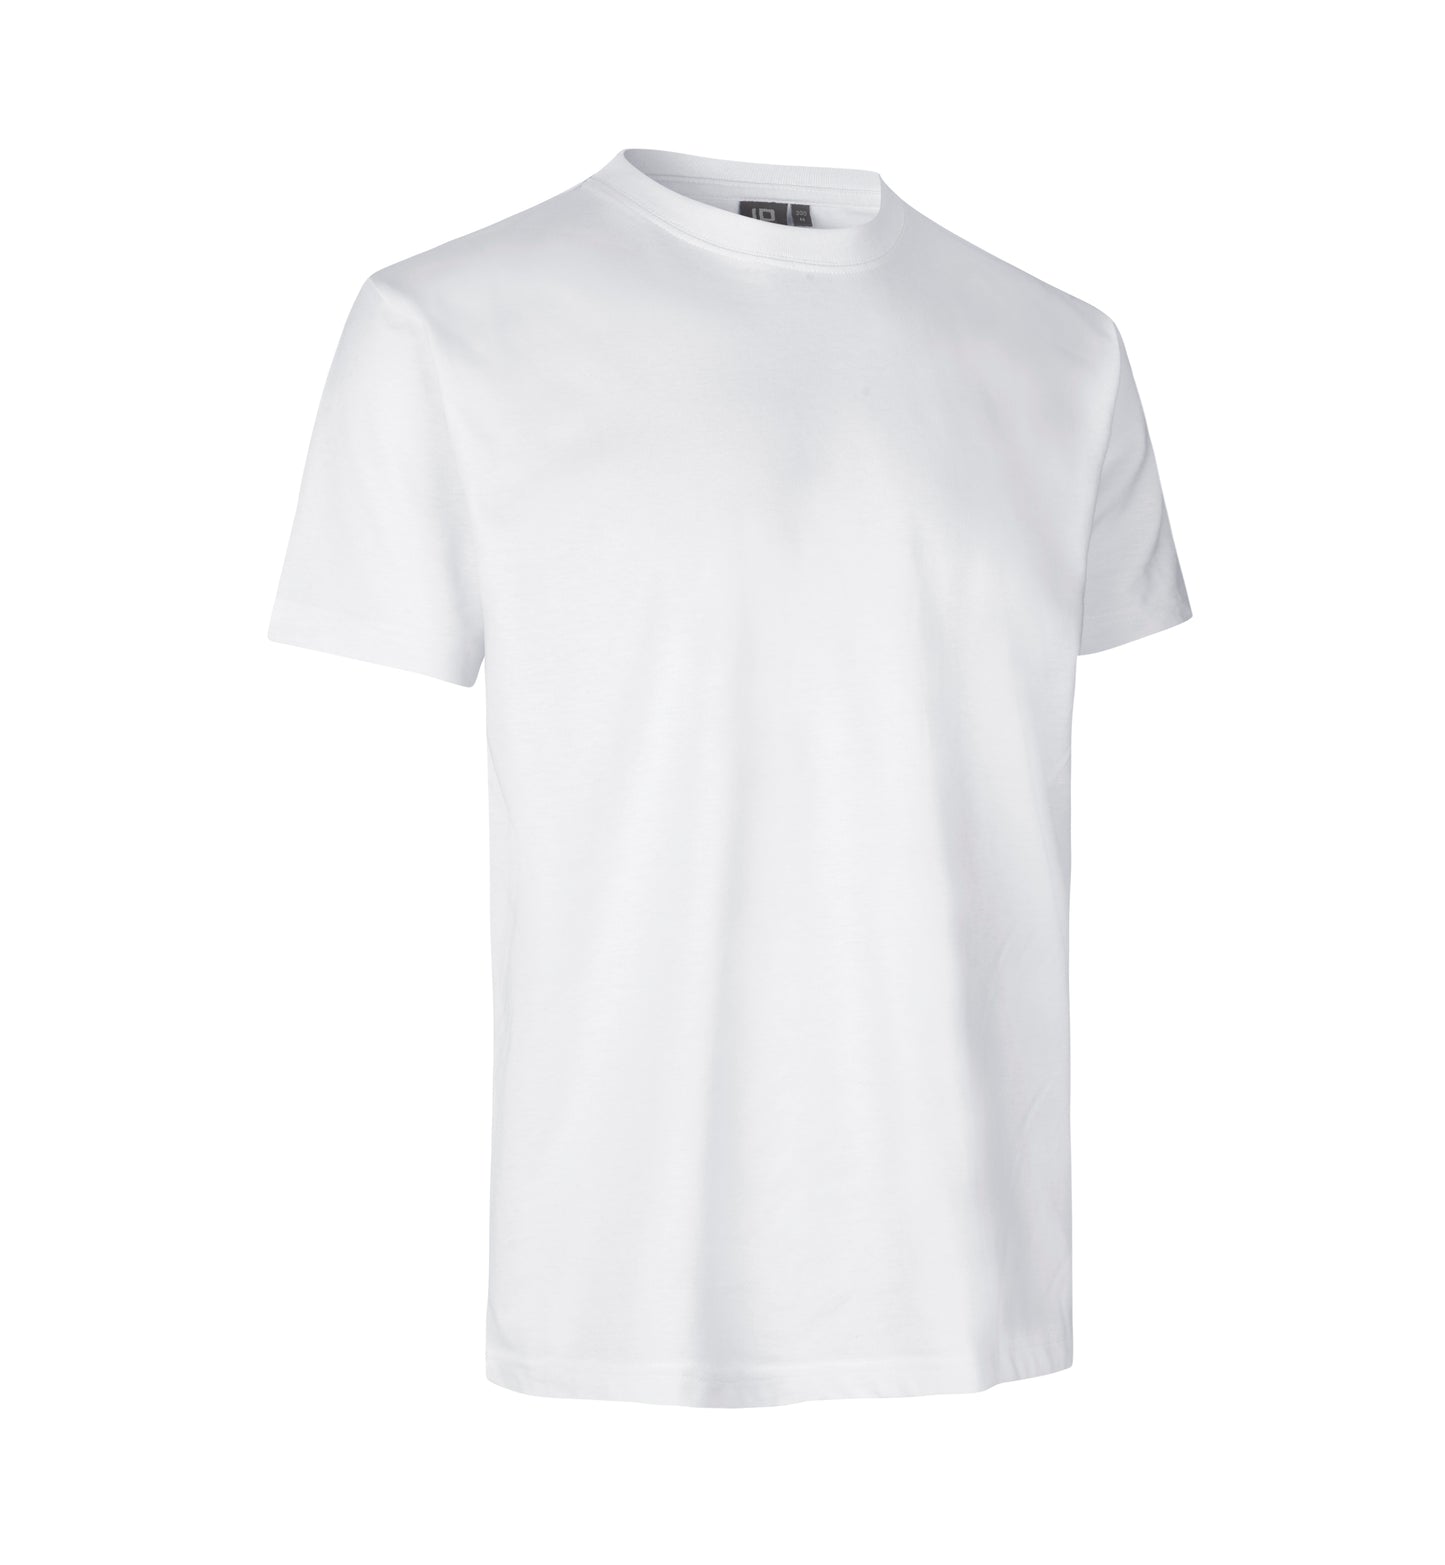 ID PRO Wear T-shirt 0300 (Private Sale)